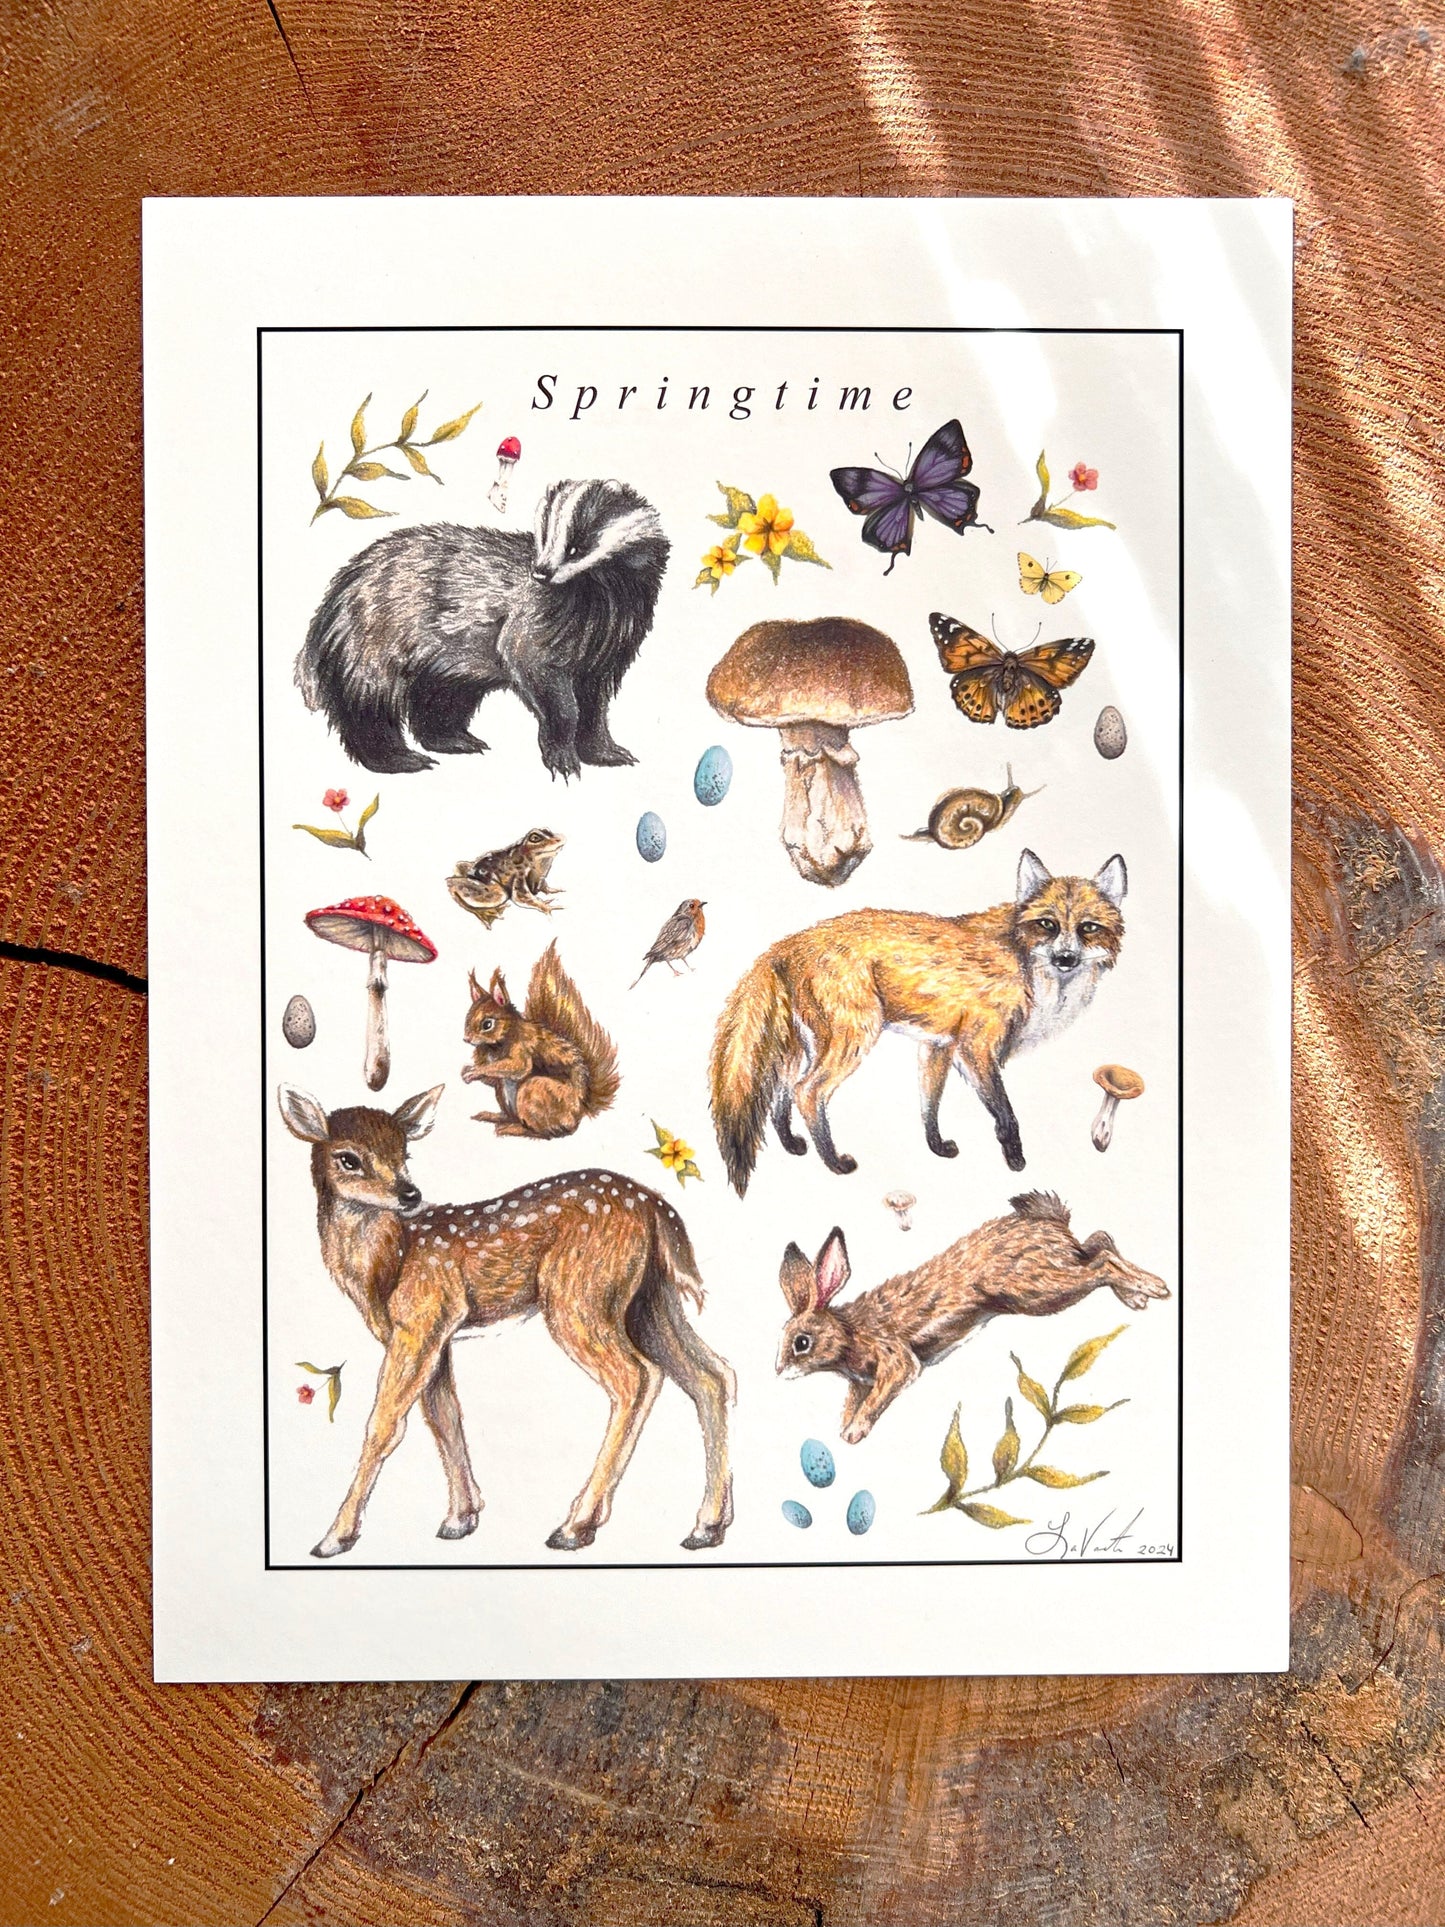 Springtime - Illustration Print